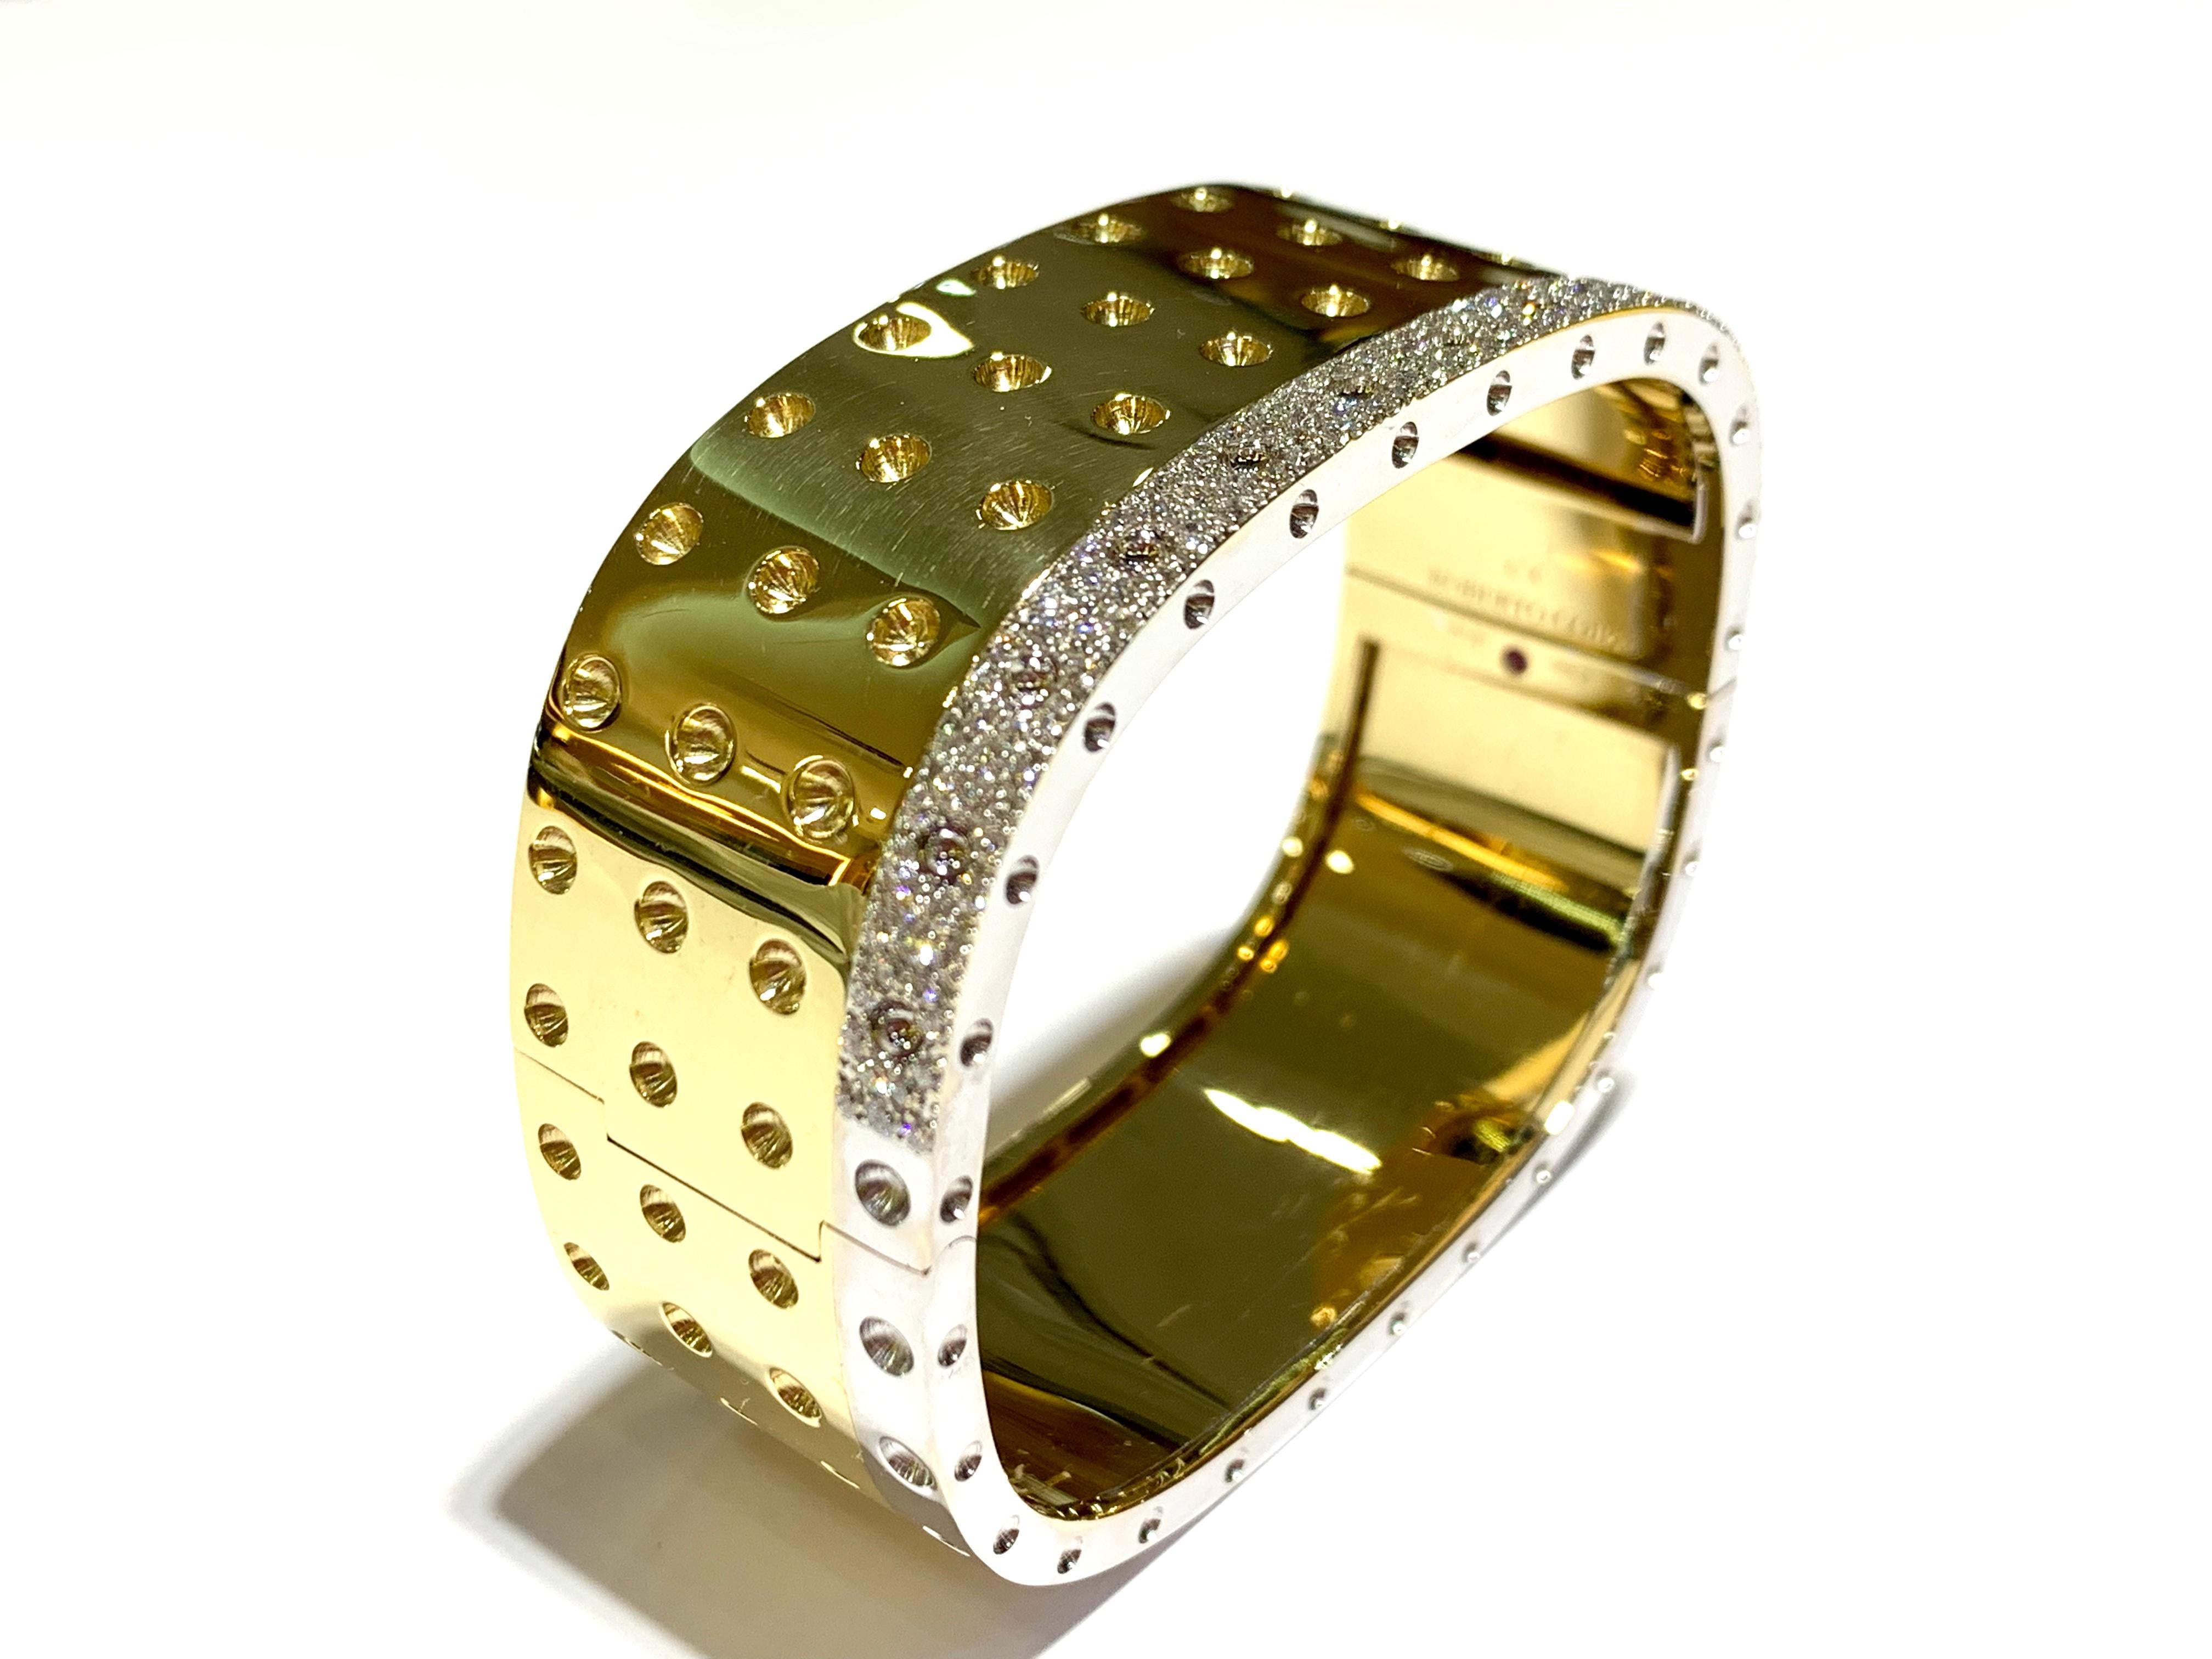 Roberto Coin Pois Moi 4 row Bangle with 1.27 carat diamond
Italian Designer 
Set in 18 karat yellow gold 
#7771505AJBAX